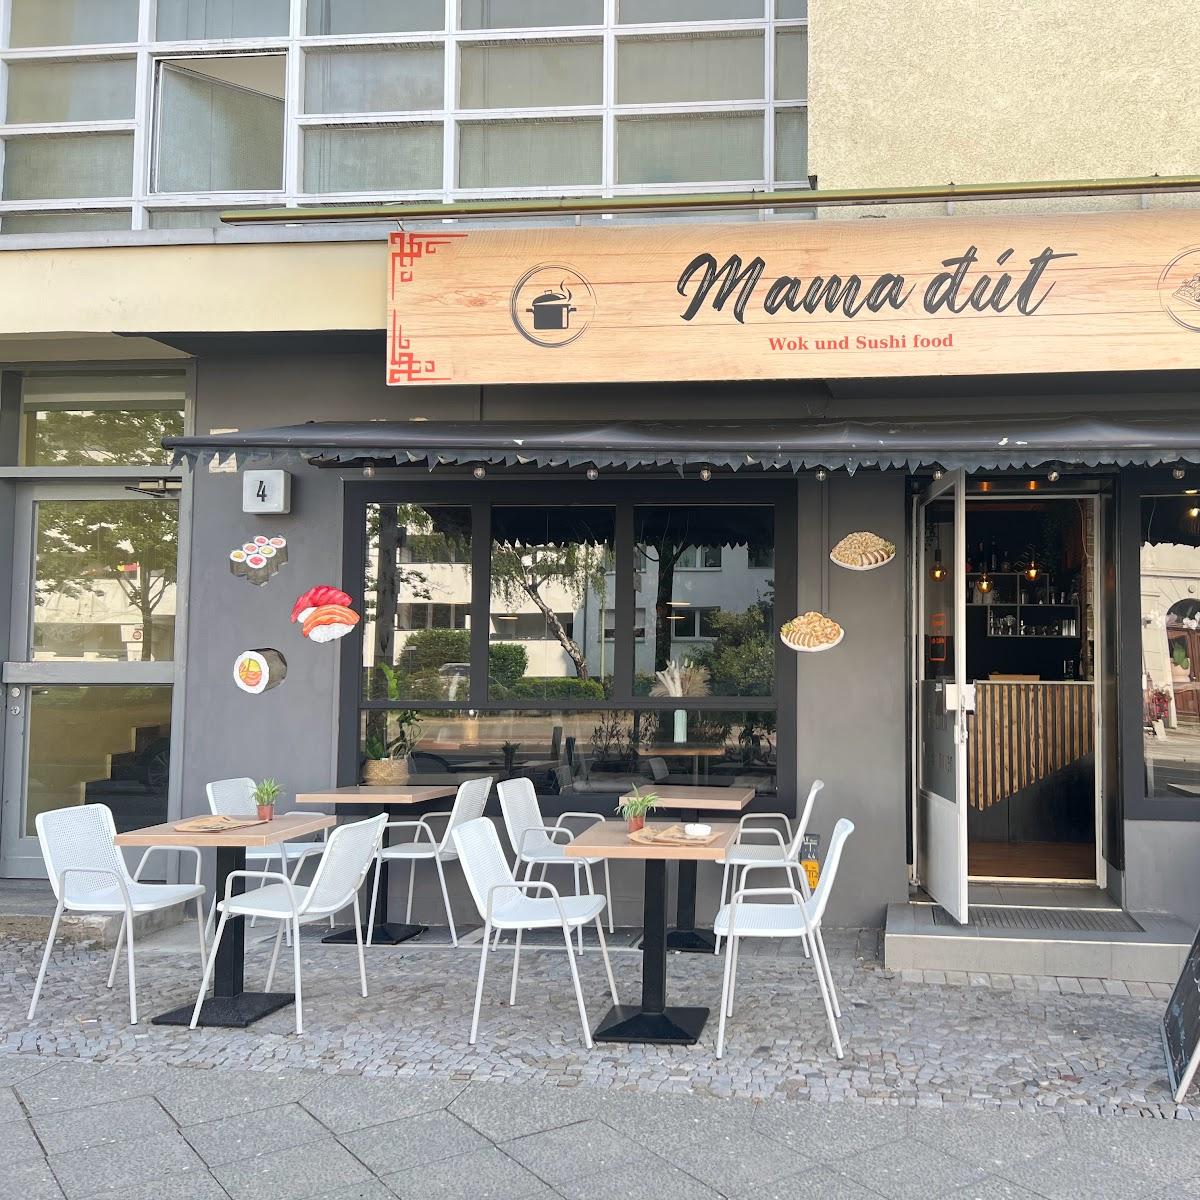 Restaurant "Mama dut" in Berlin